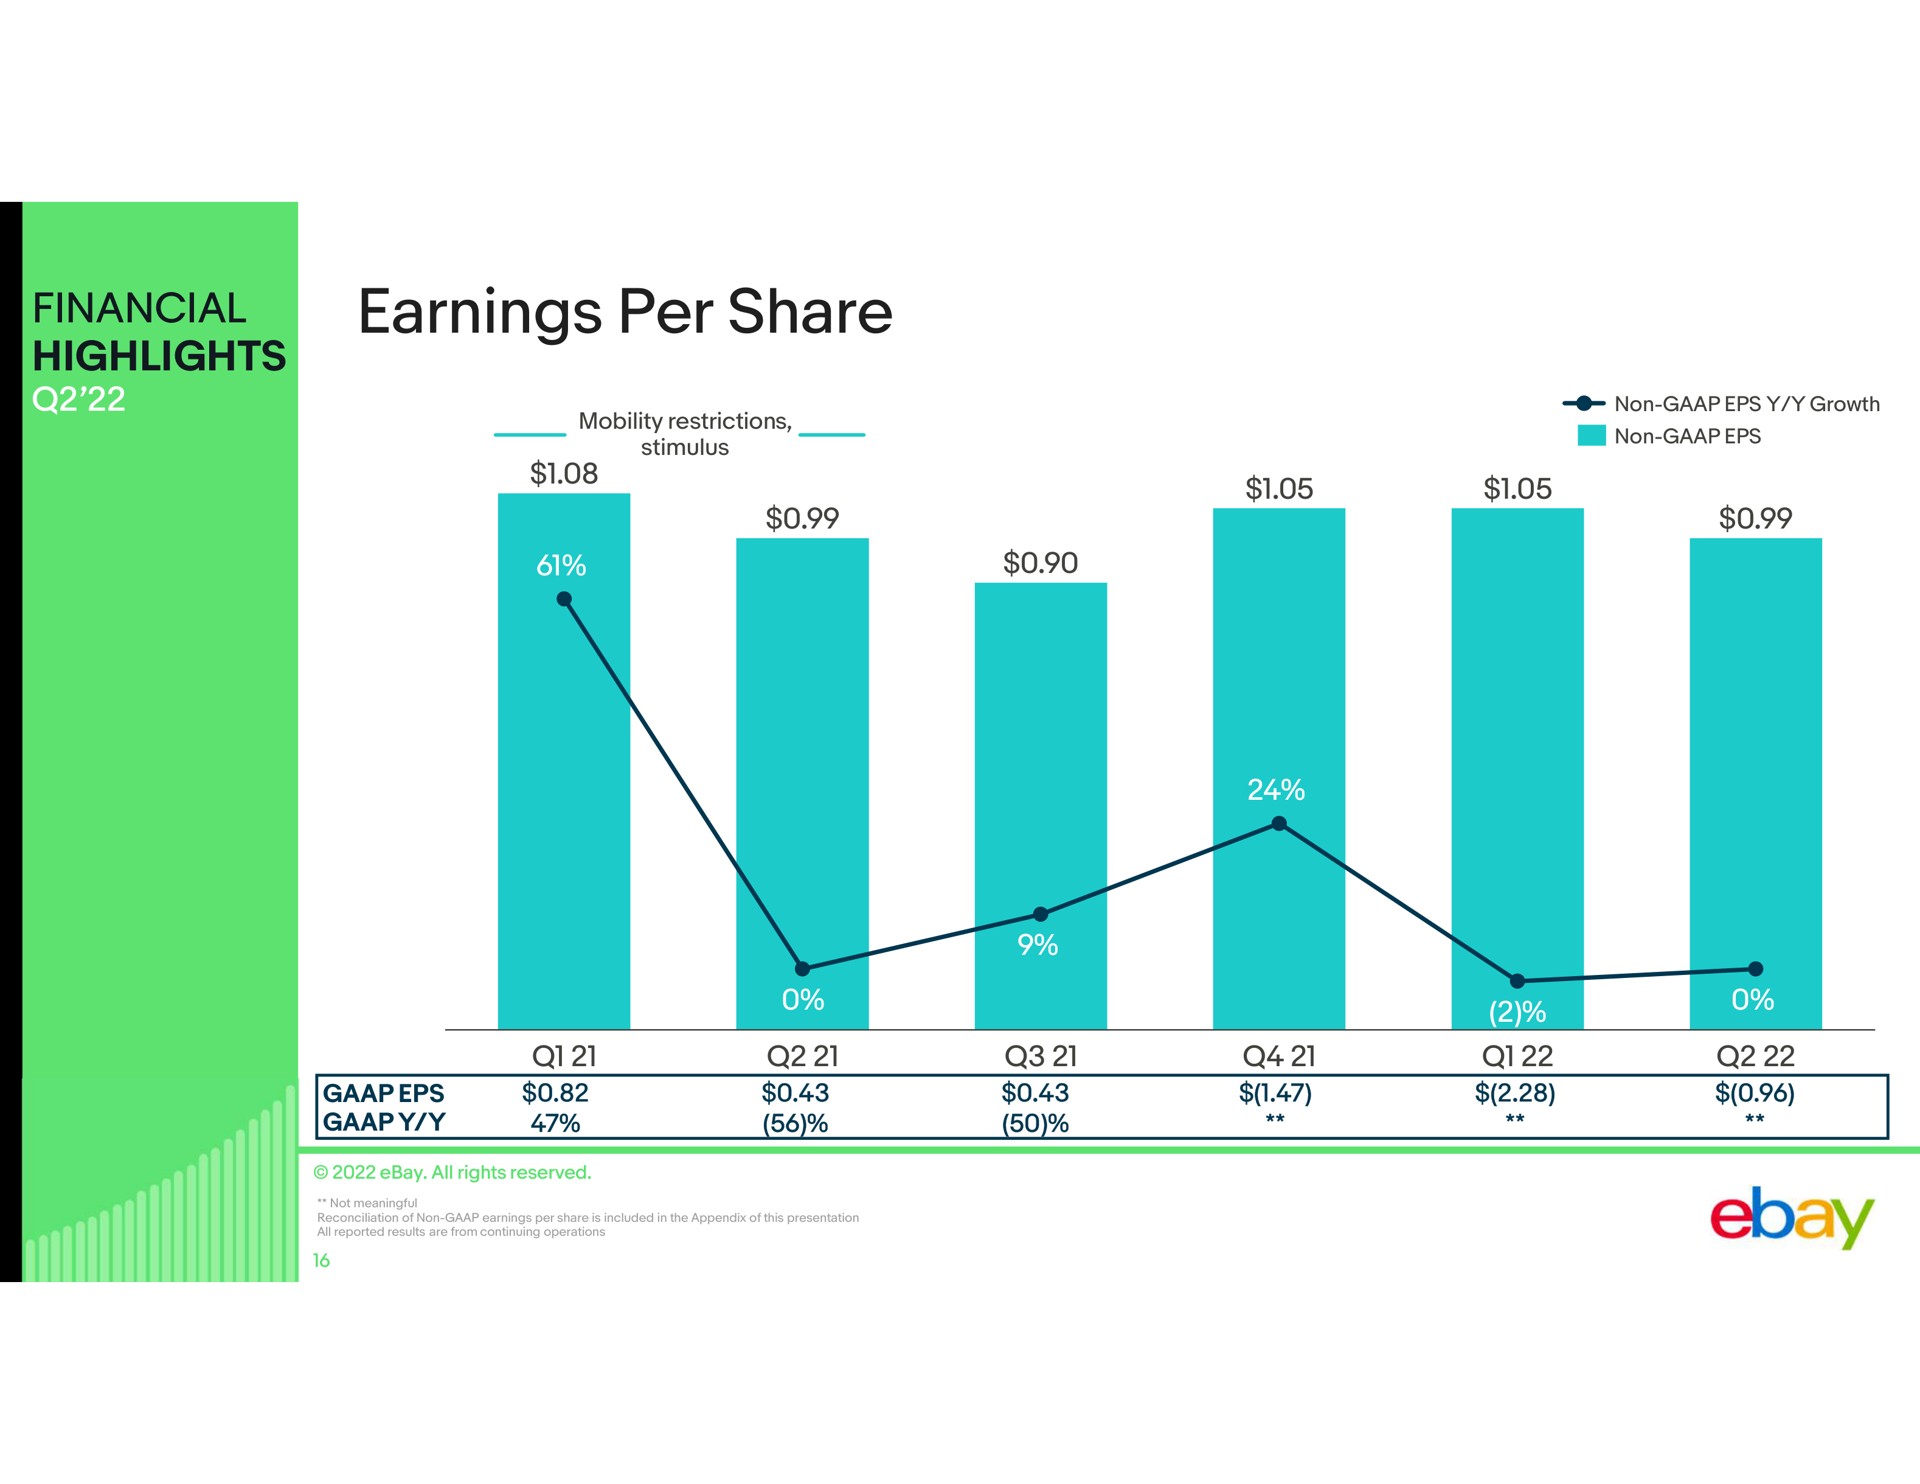 financial highlights earnings per share | eBay